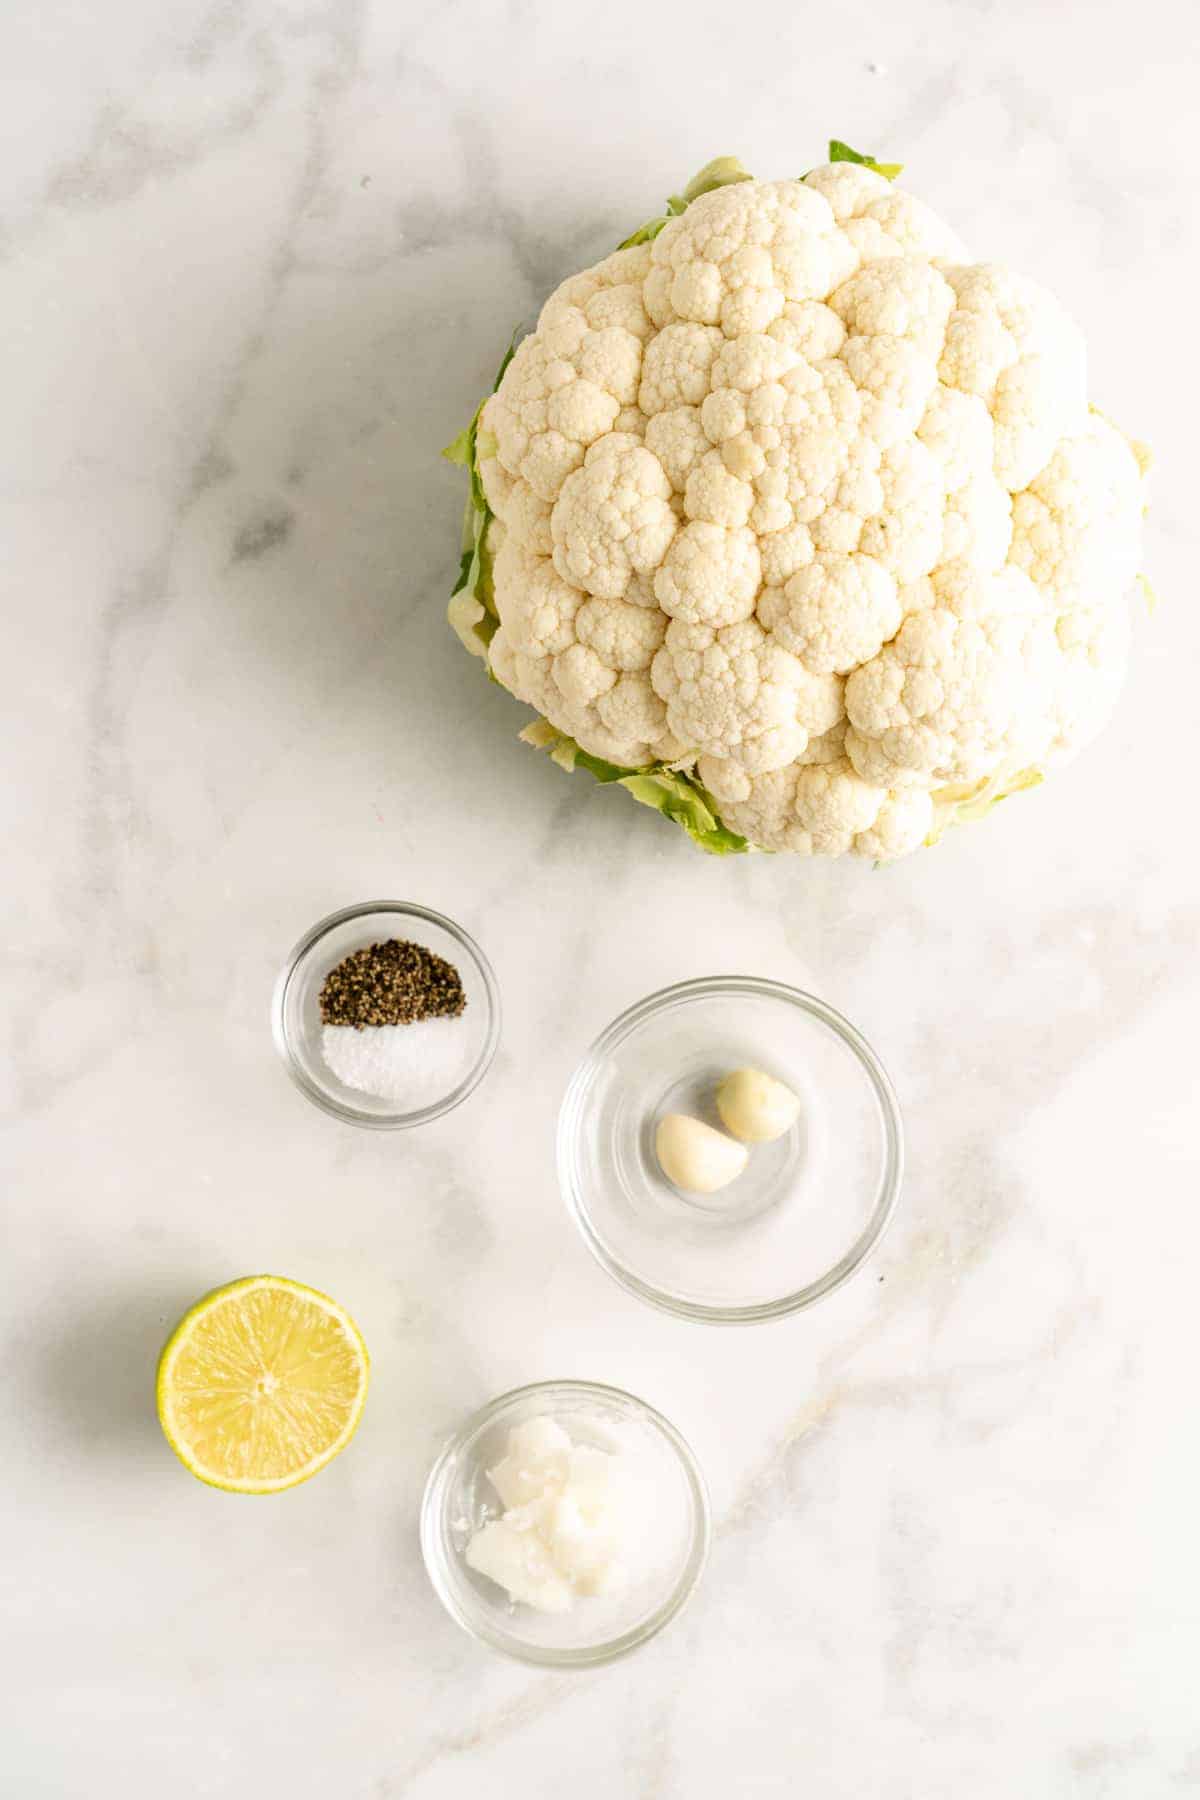 Overhead view of cauliflower rice ingredients